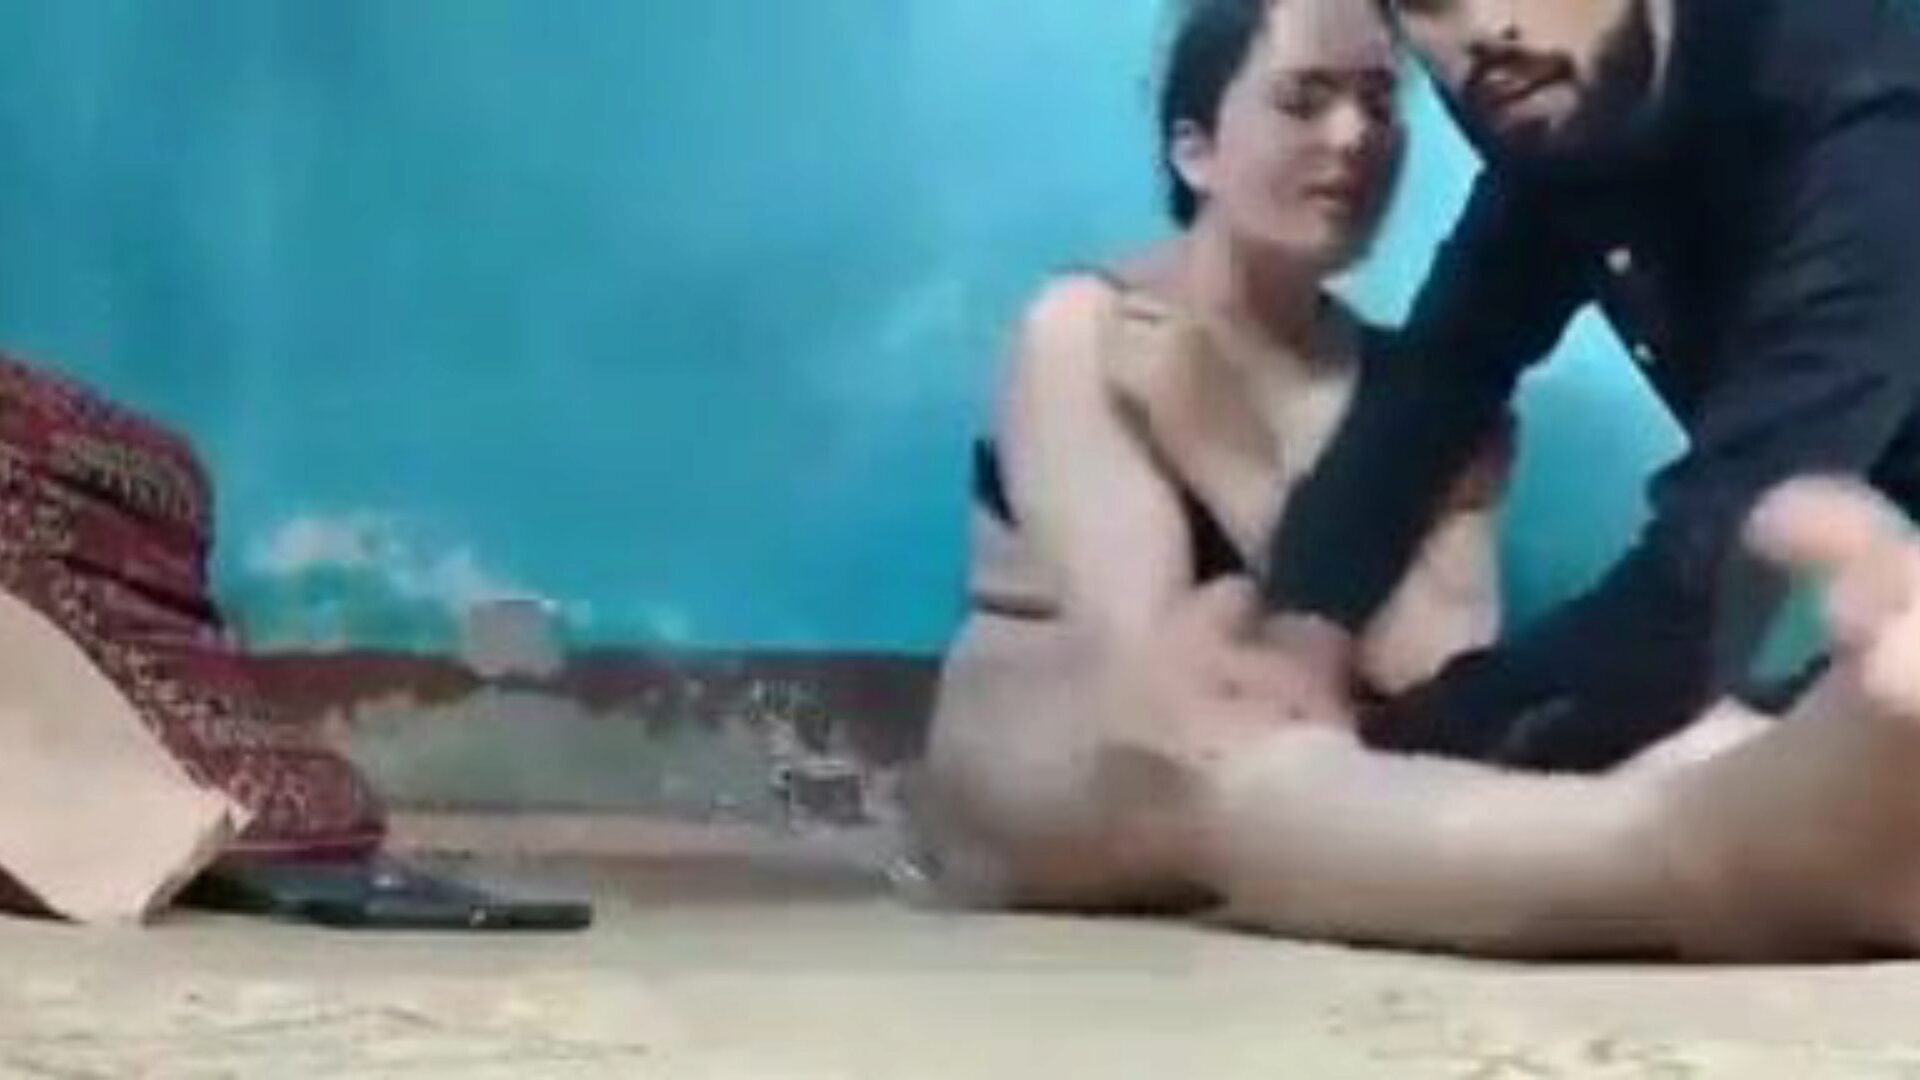 kashmiri sex video: free indian porn video 69 - xhamster ver kashmiri sex video tube bang-out video gratis en xhamster, con la colección más sexy de escenas de episodios de sexo indio xxx gratis e historias porno